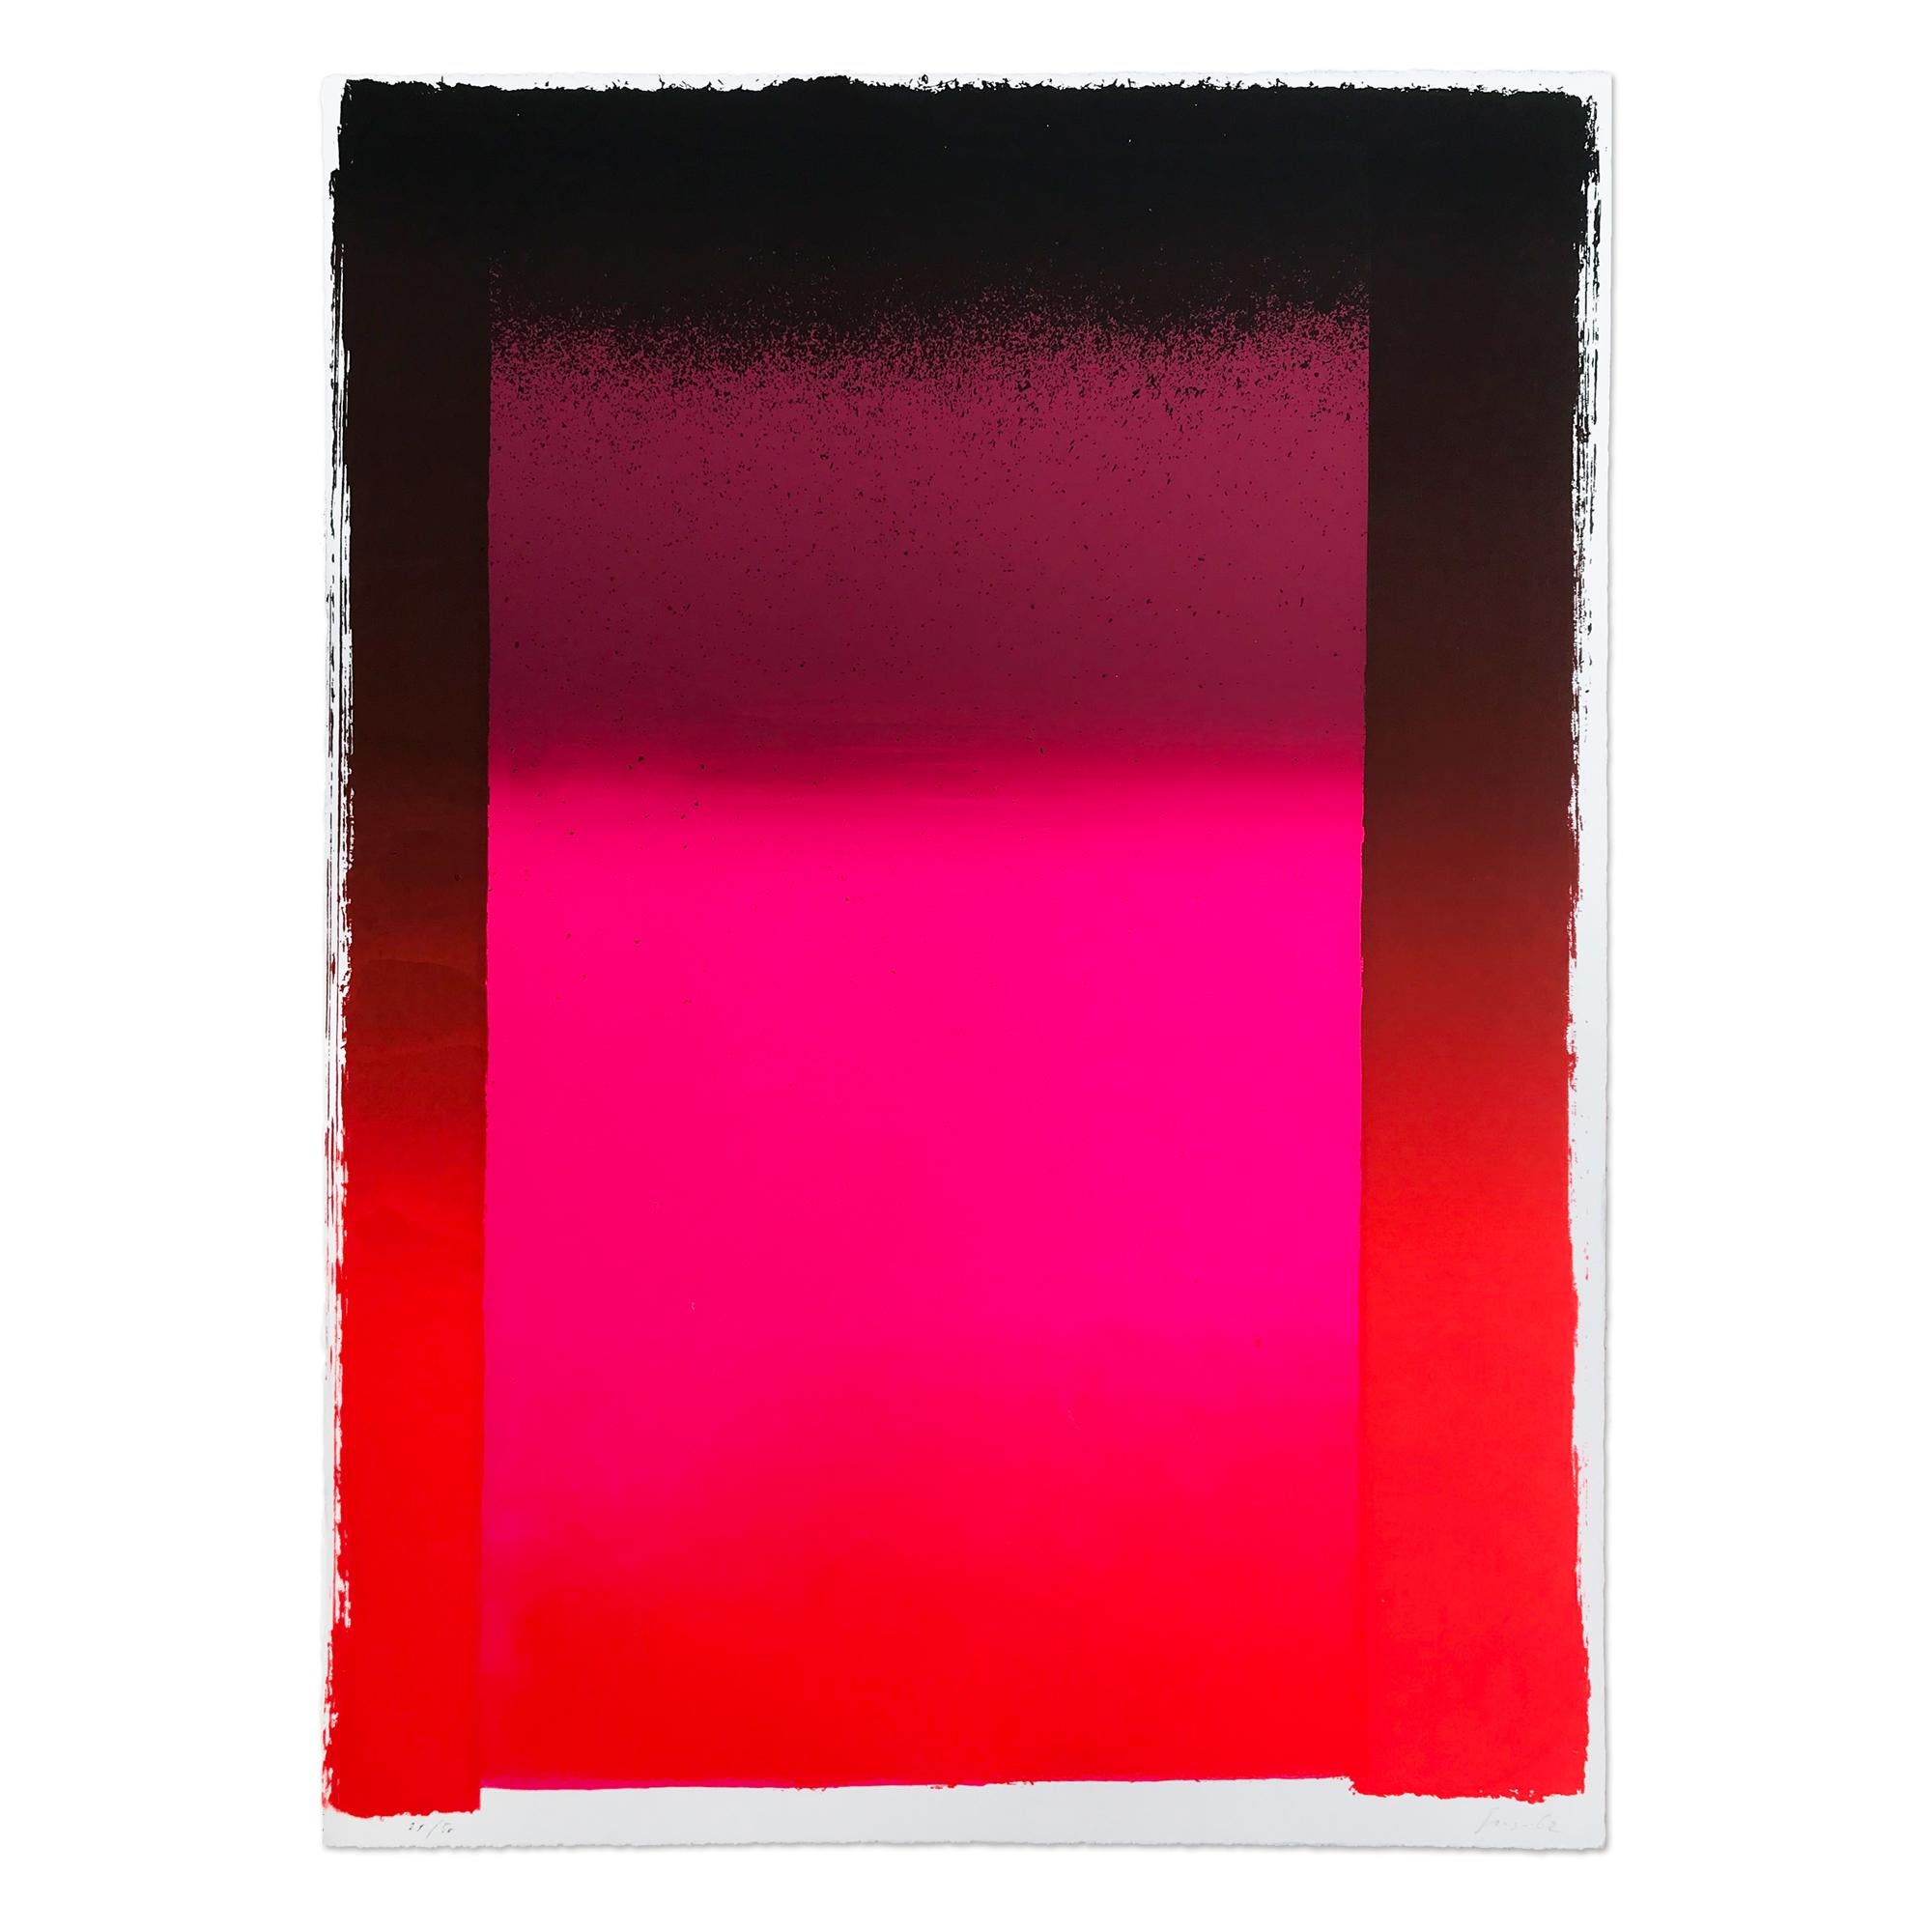 Rupprecht Geiger Abstract Print - Black on Different Reds, Abstract Art, Minimalism, Modern Art, 20th Century